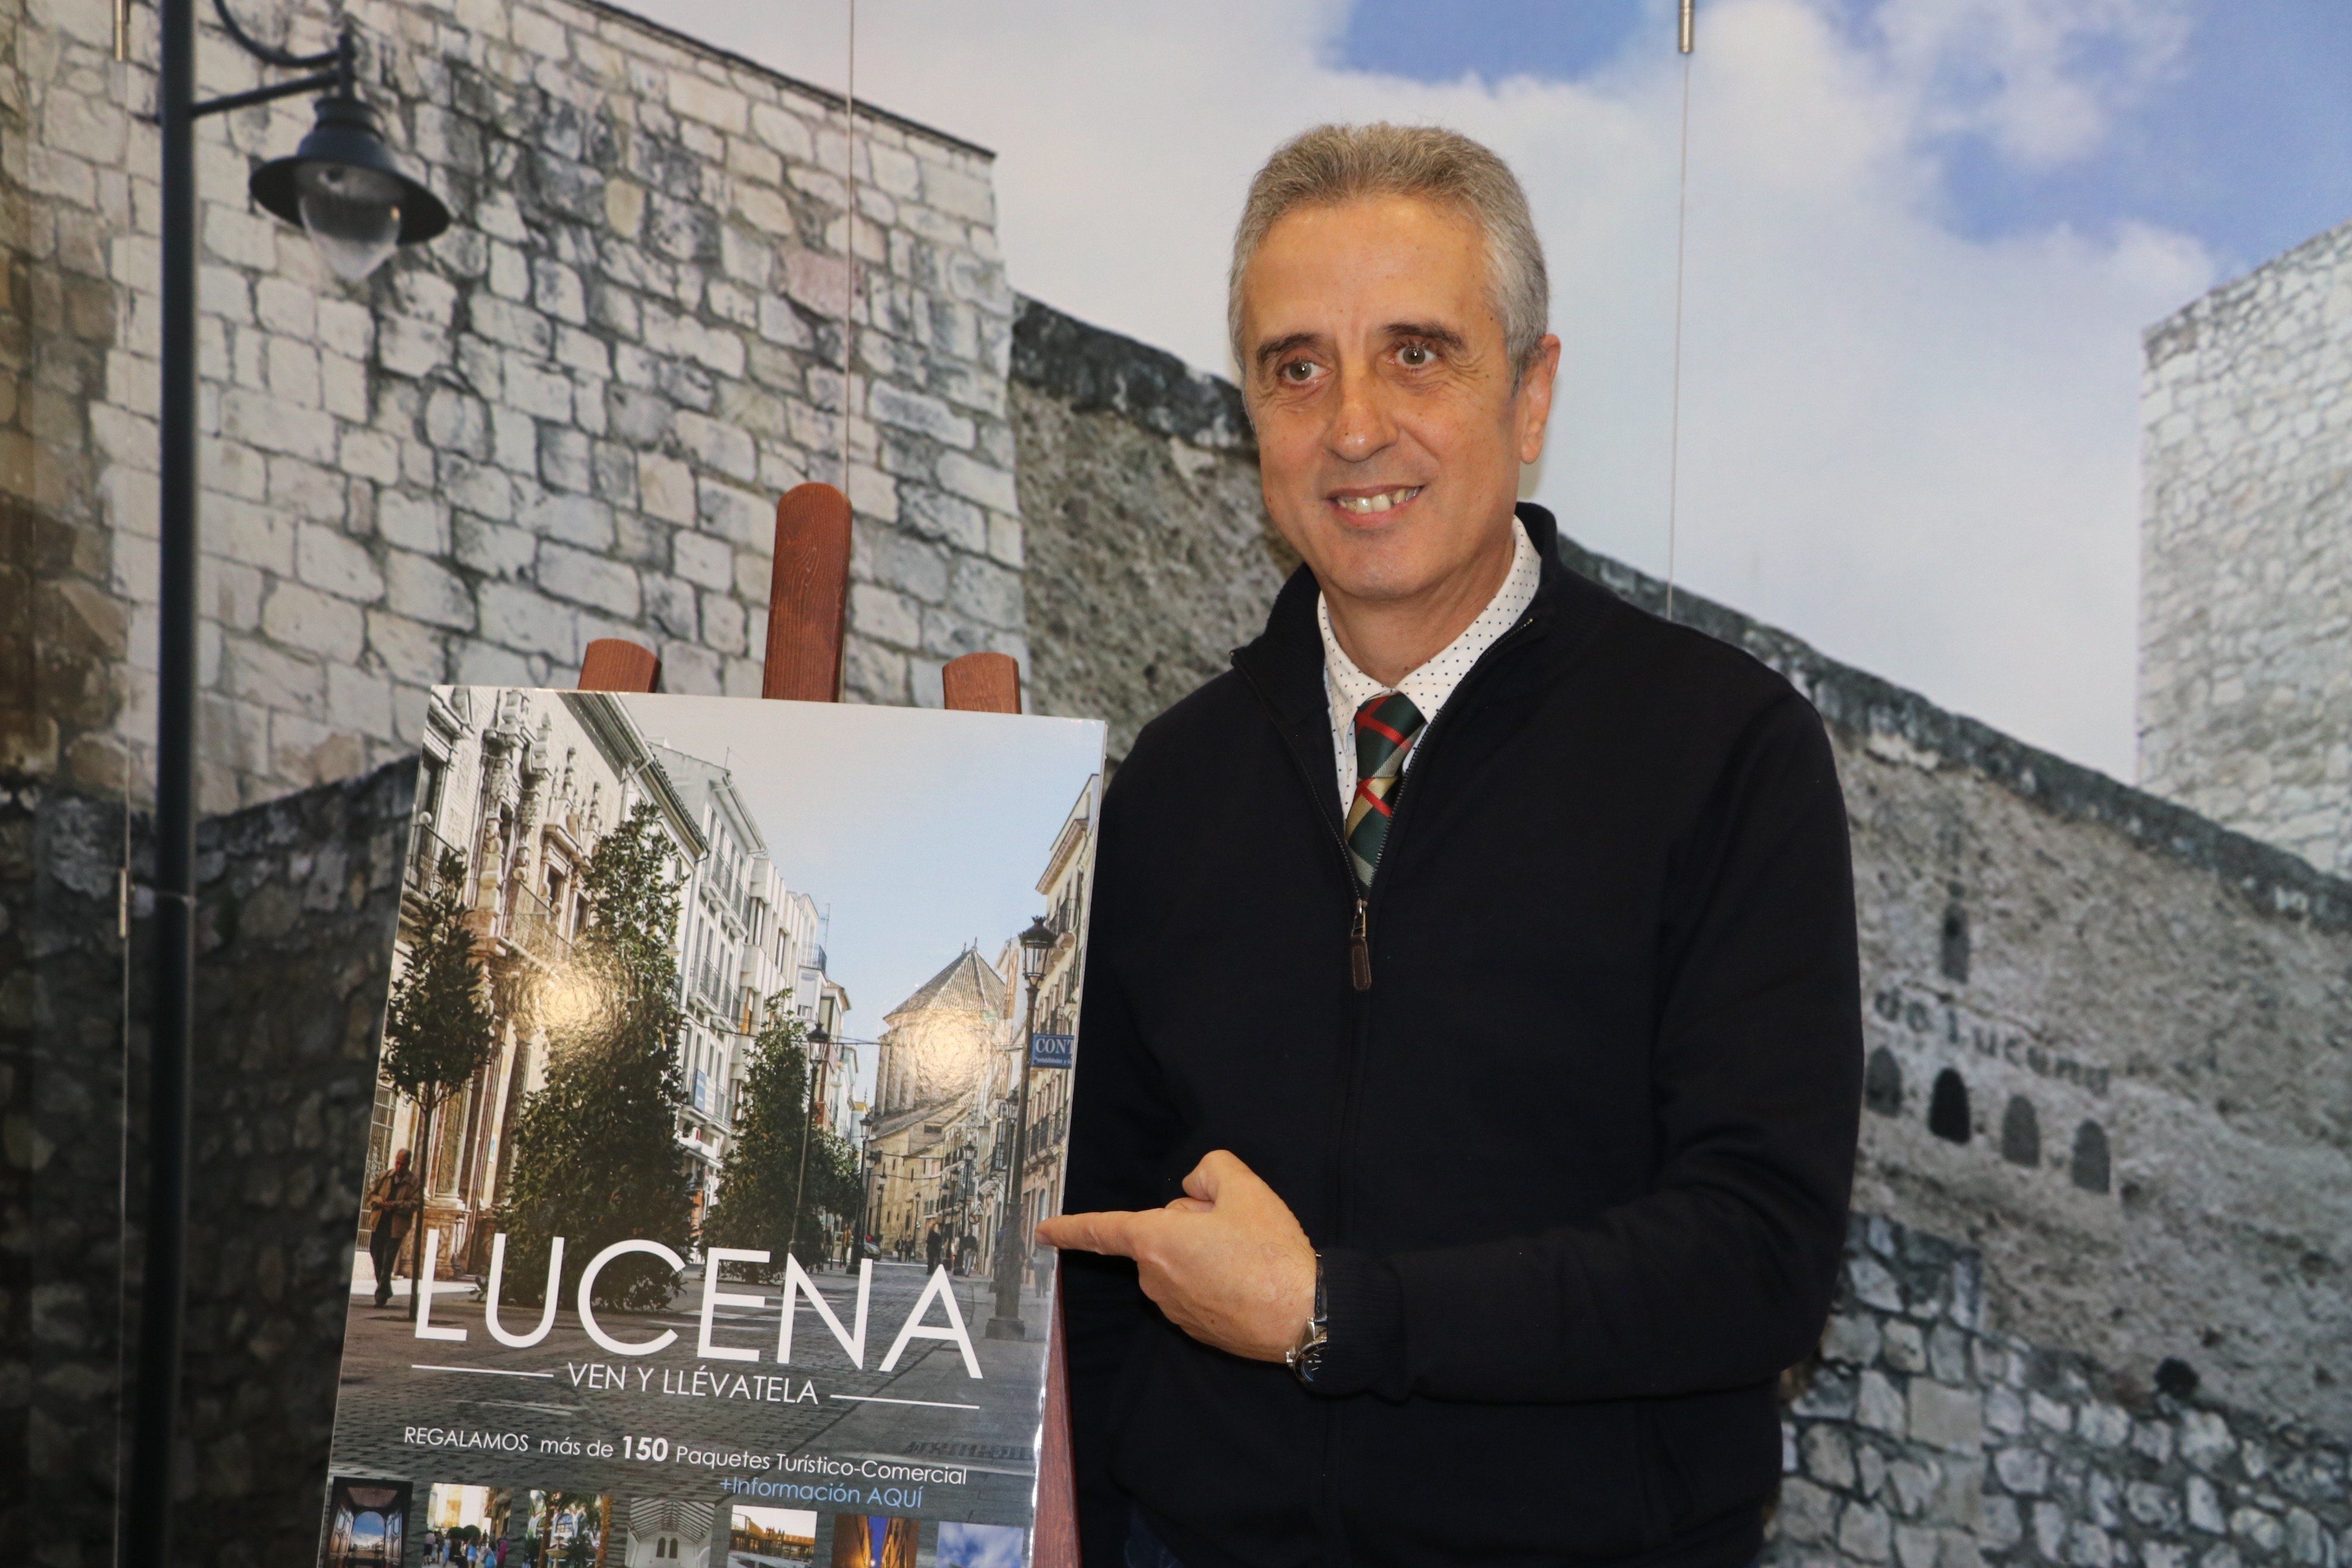  Juan Pérez junto a la imagen promocional de la campaña 'Lucena, ven y llévatela' 